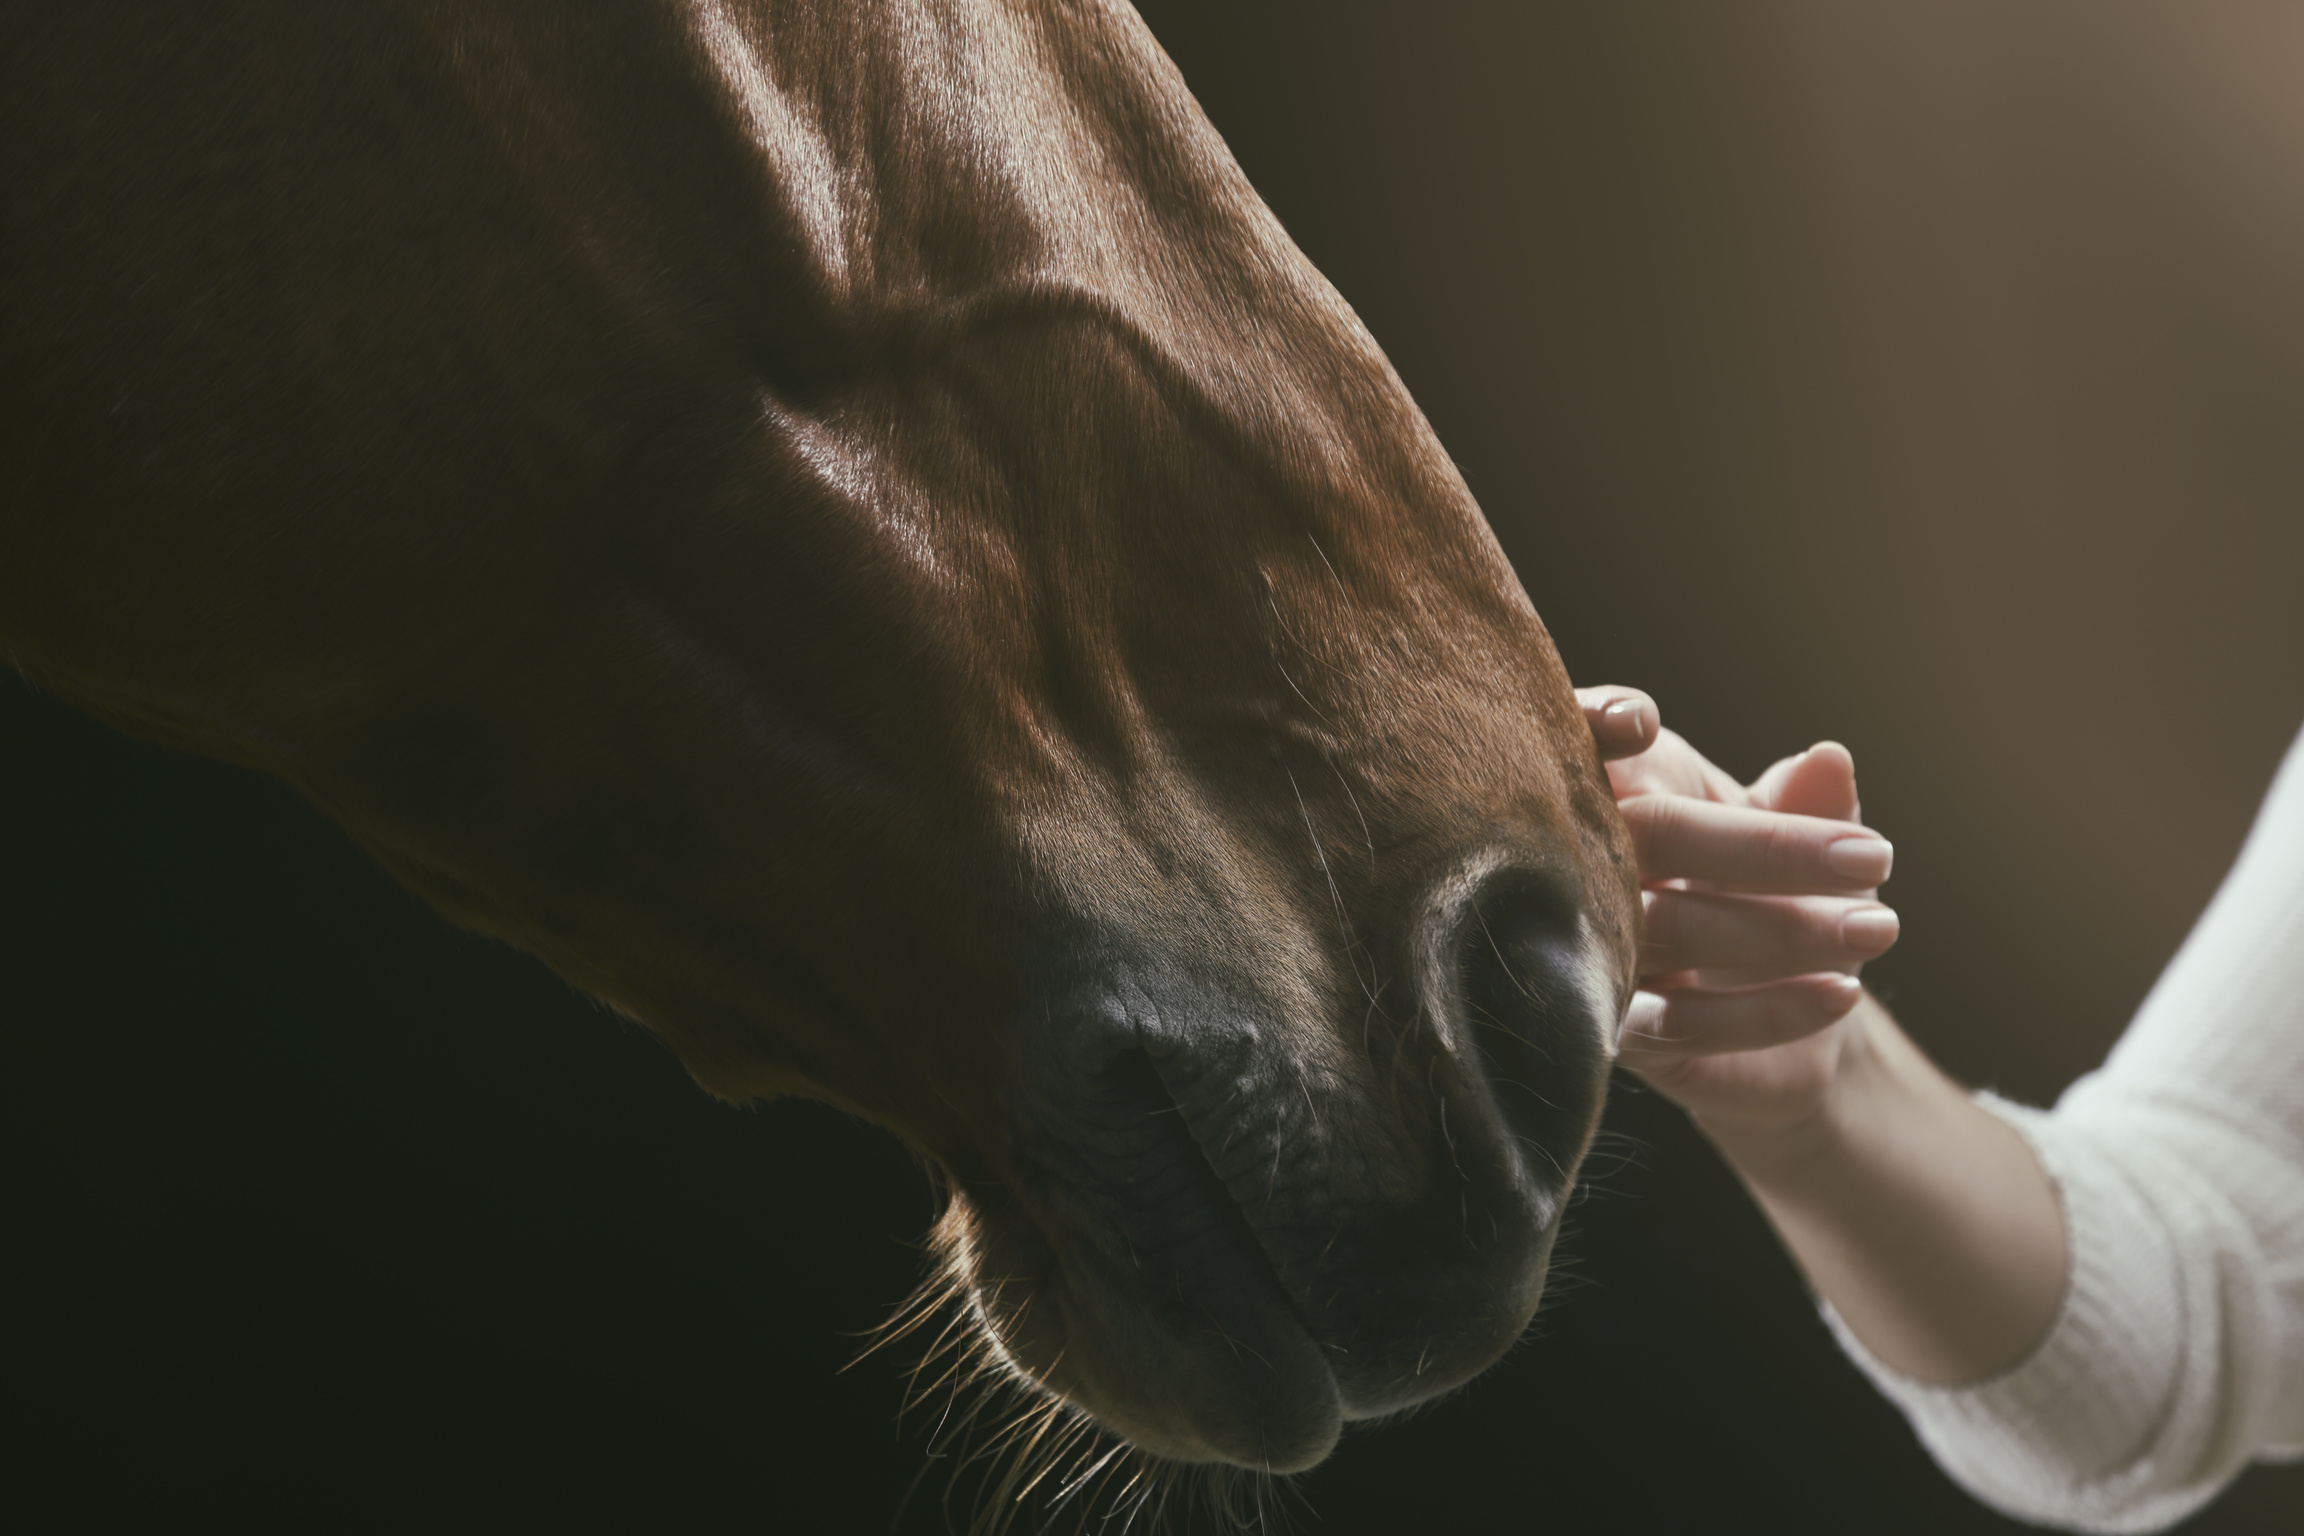 Her horse - hand stroking horse